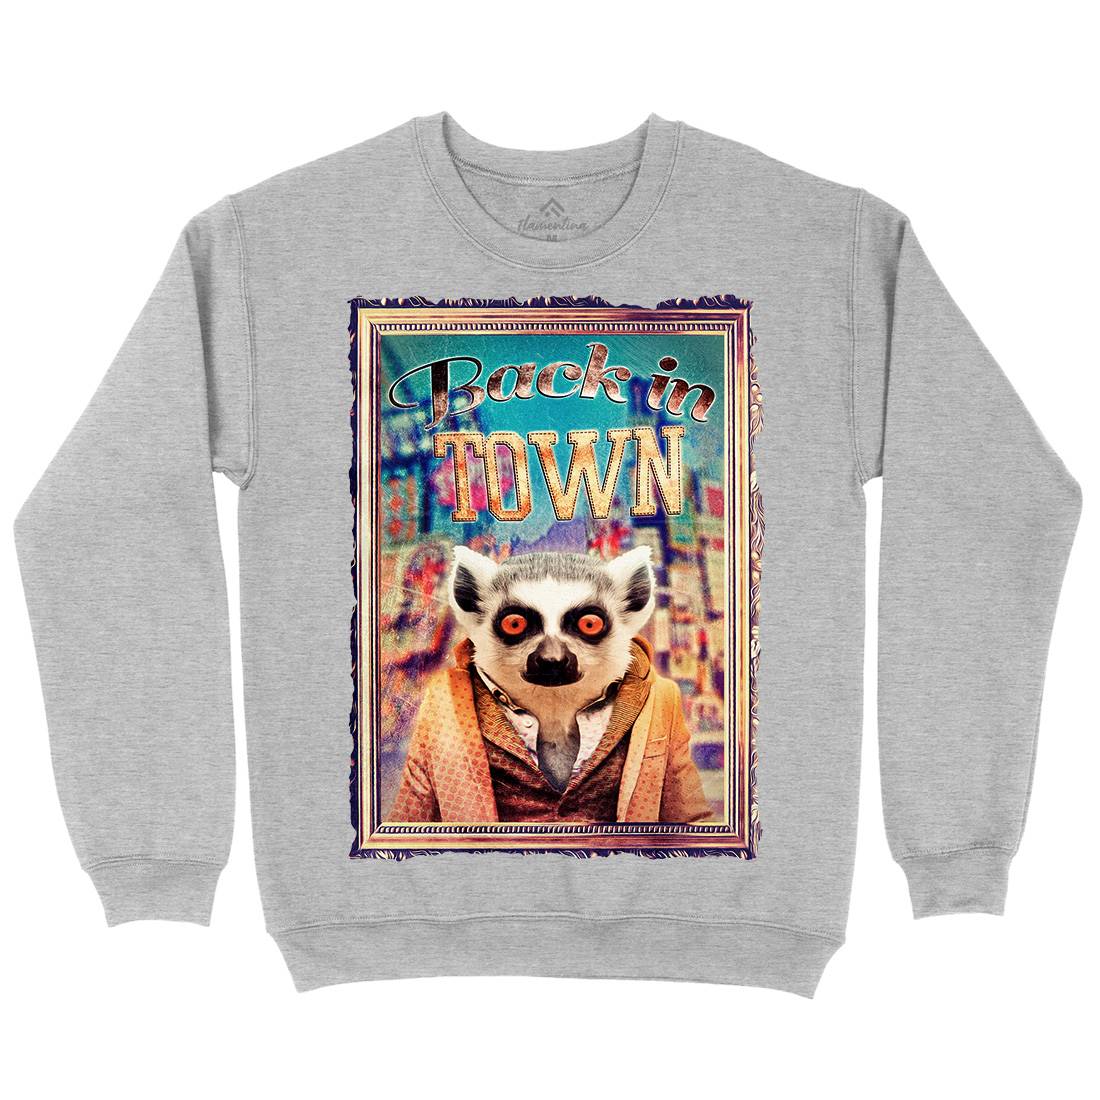 Back In Town Kids Crew Neck Sweatshirt Art A807